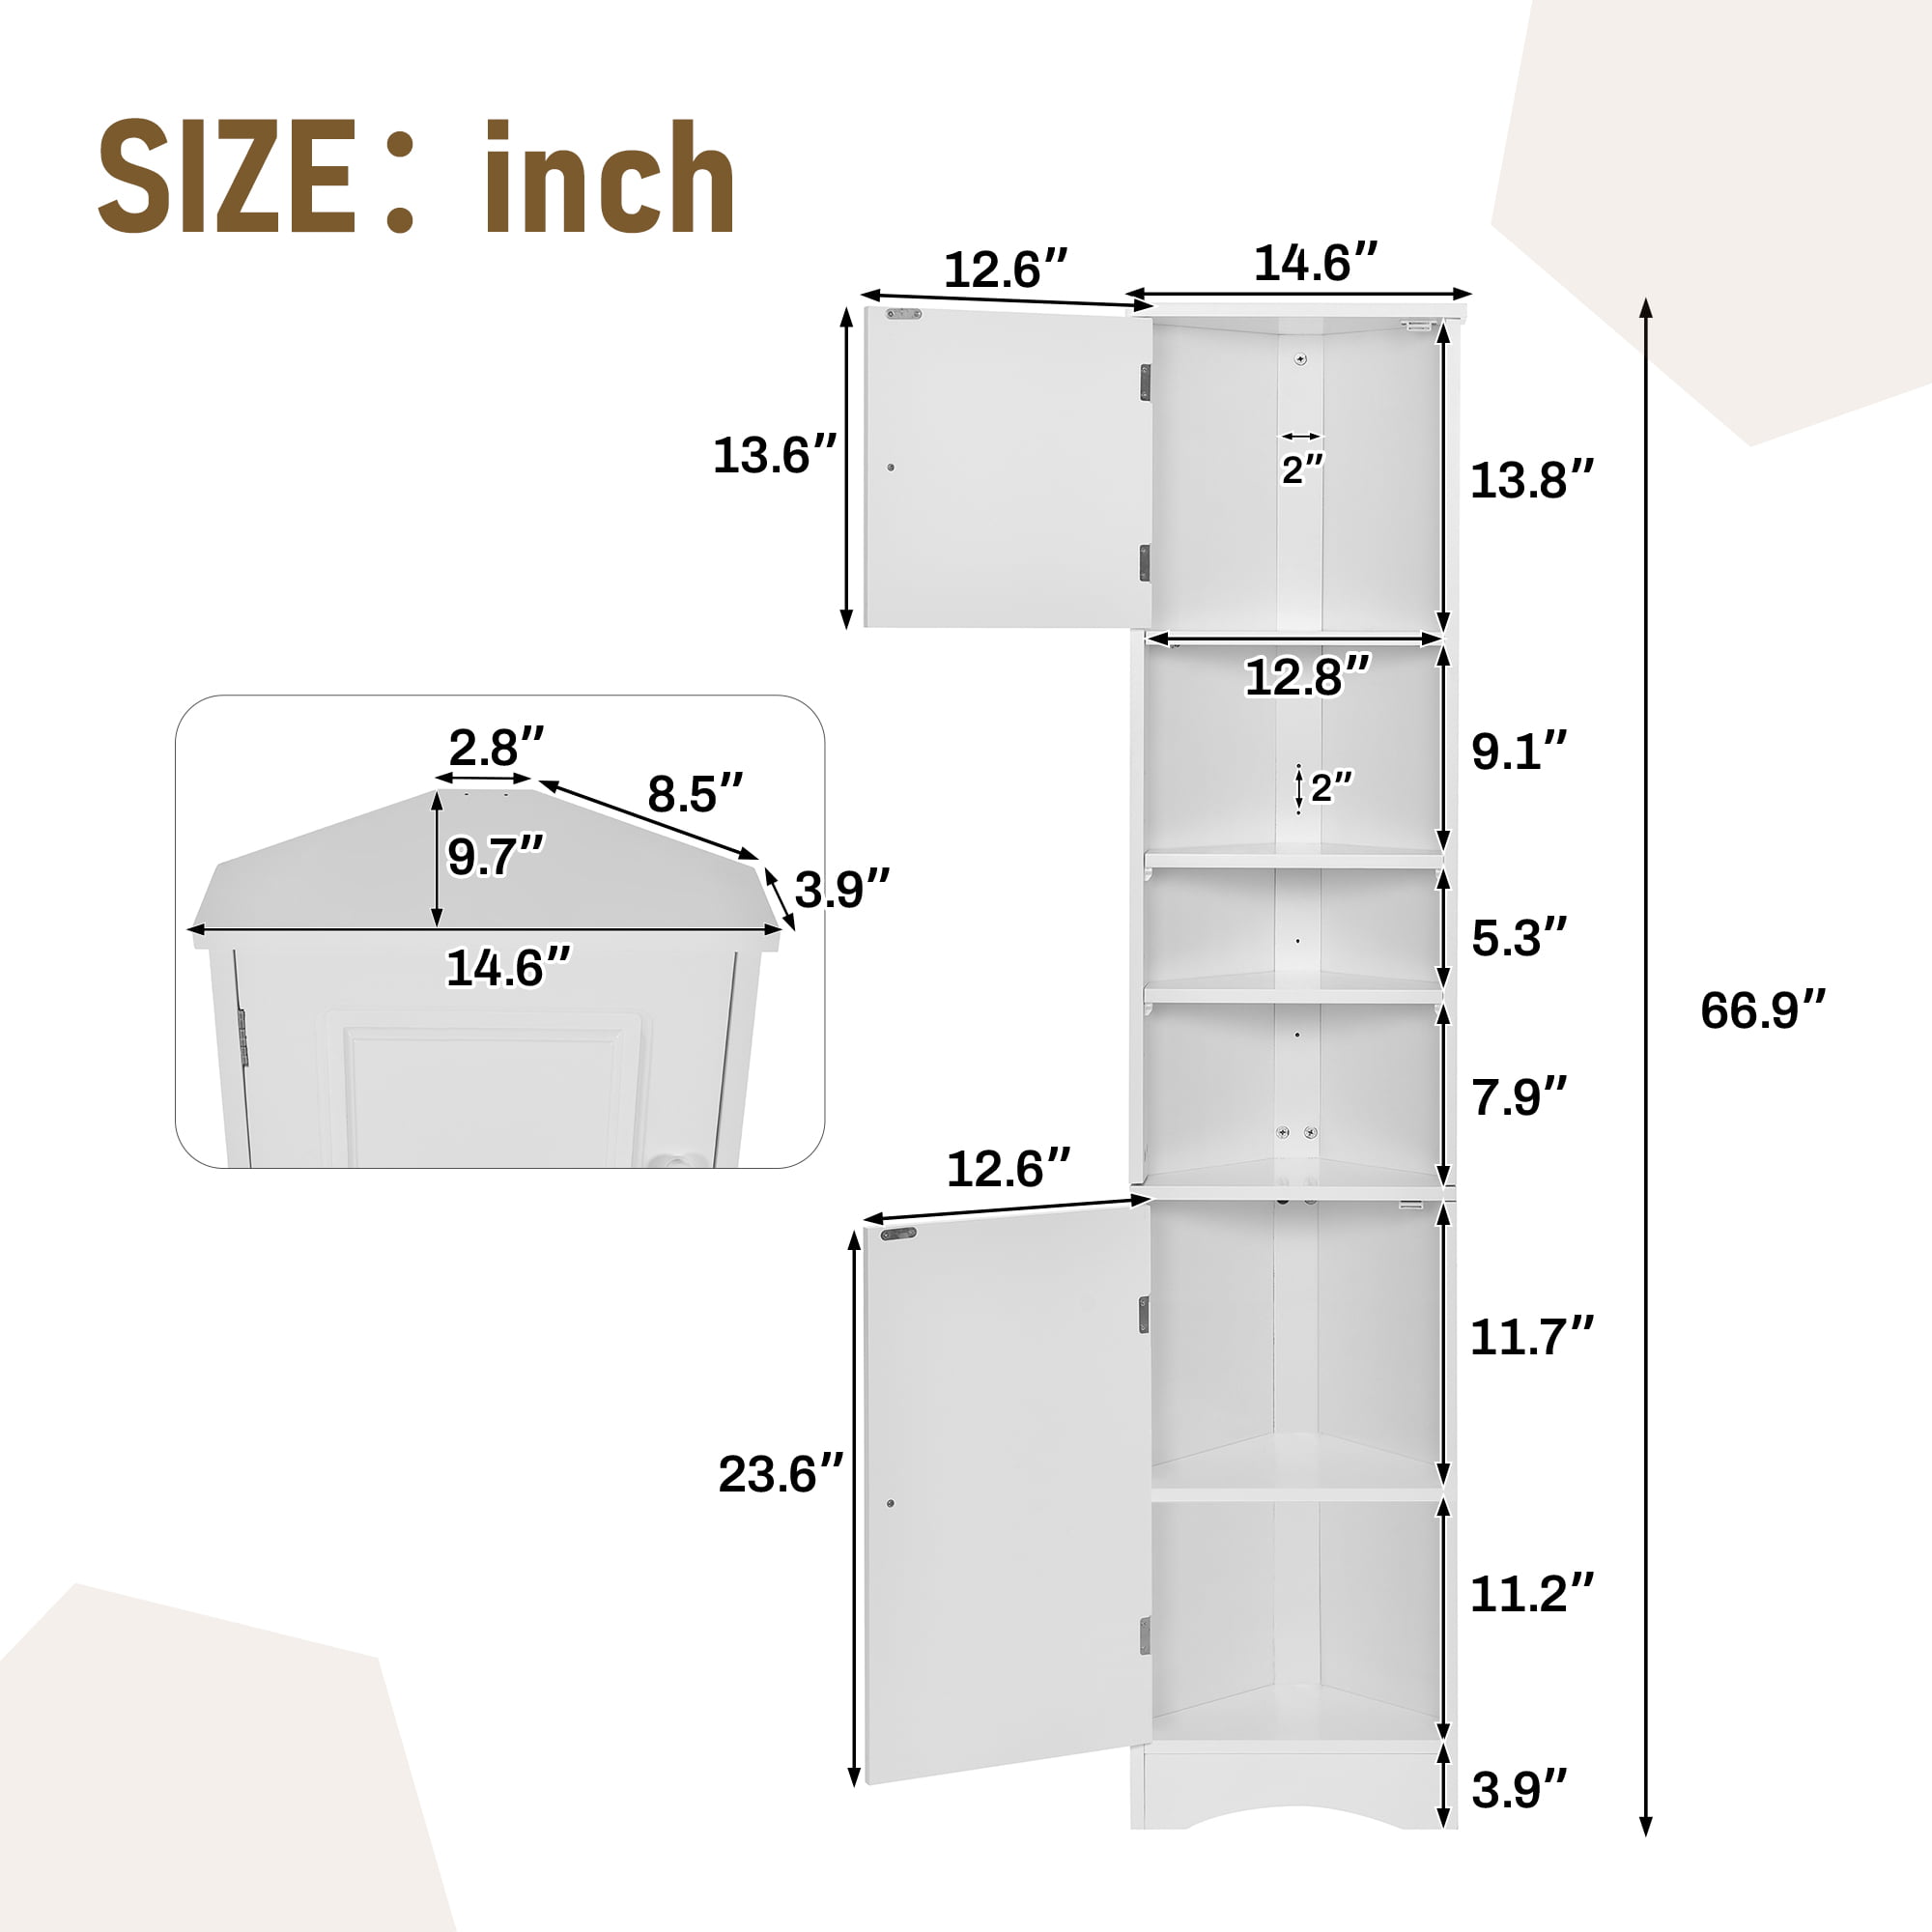 Dropship Multi-Functional Corner Cabinet Tall Bathroom Storage